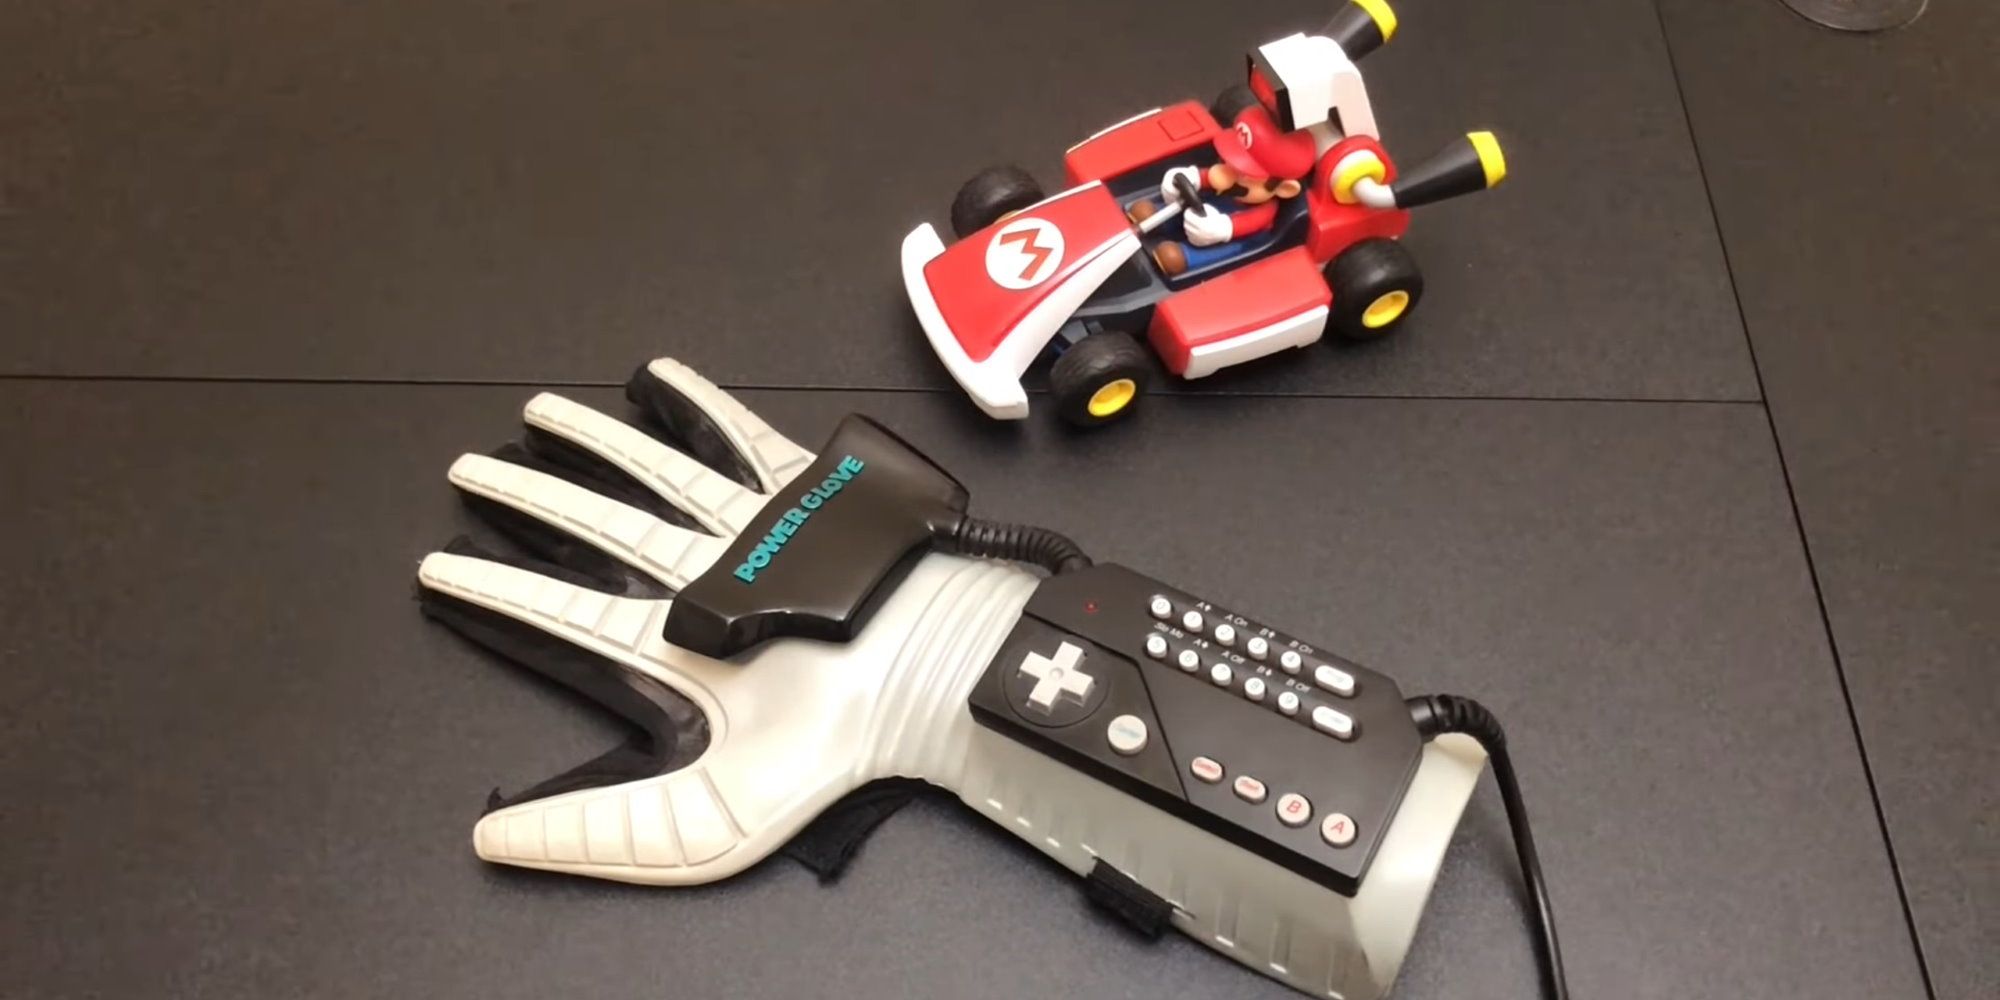 Power Glove Mario Kart - via Will It Work on YouTube